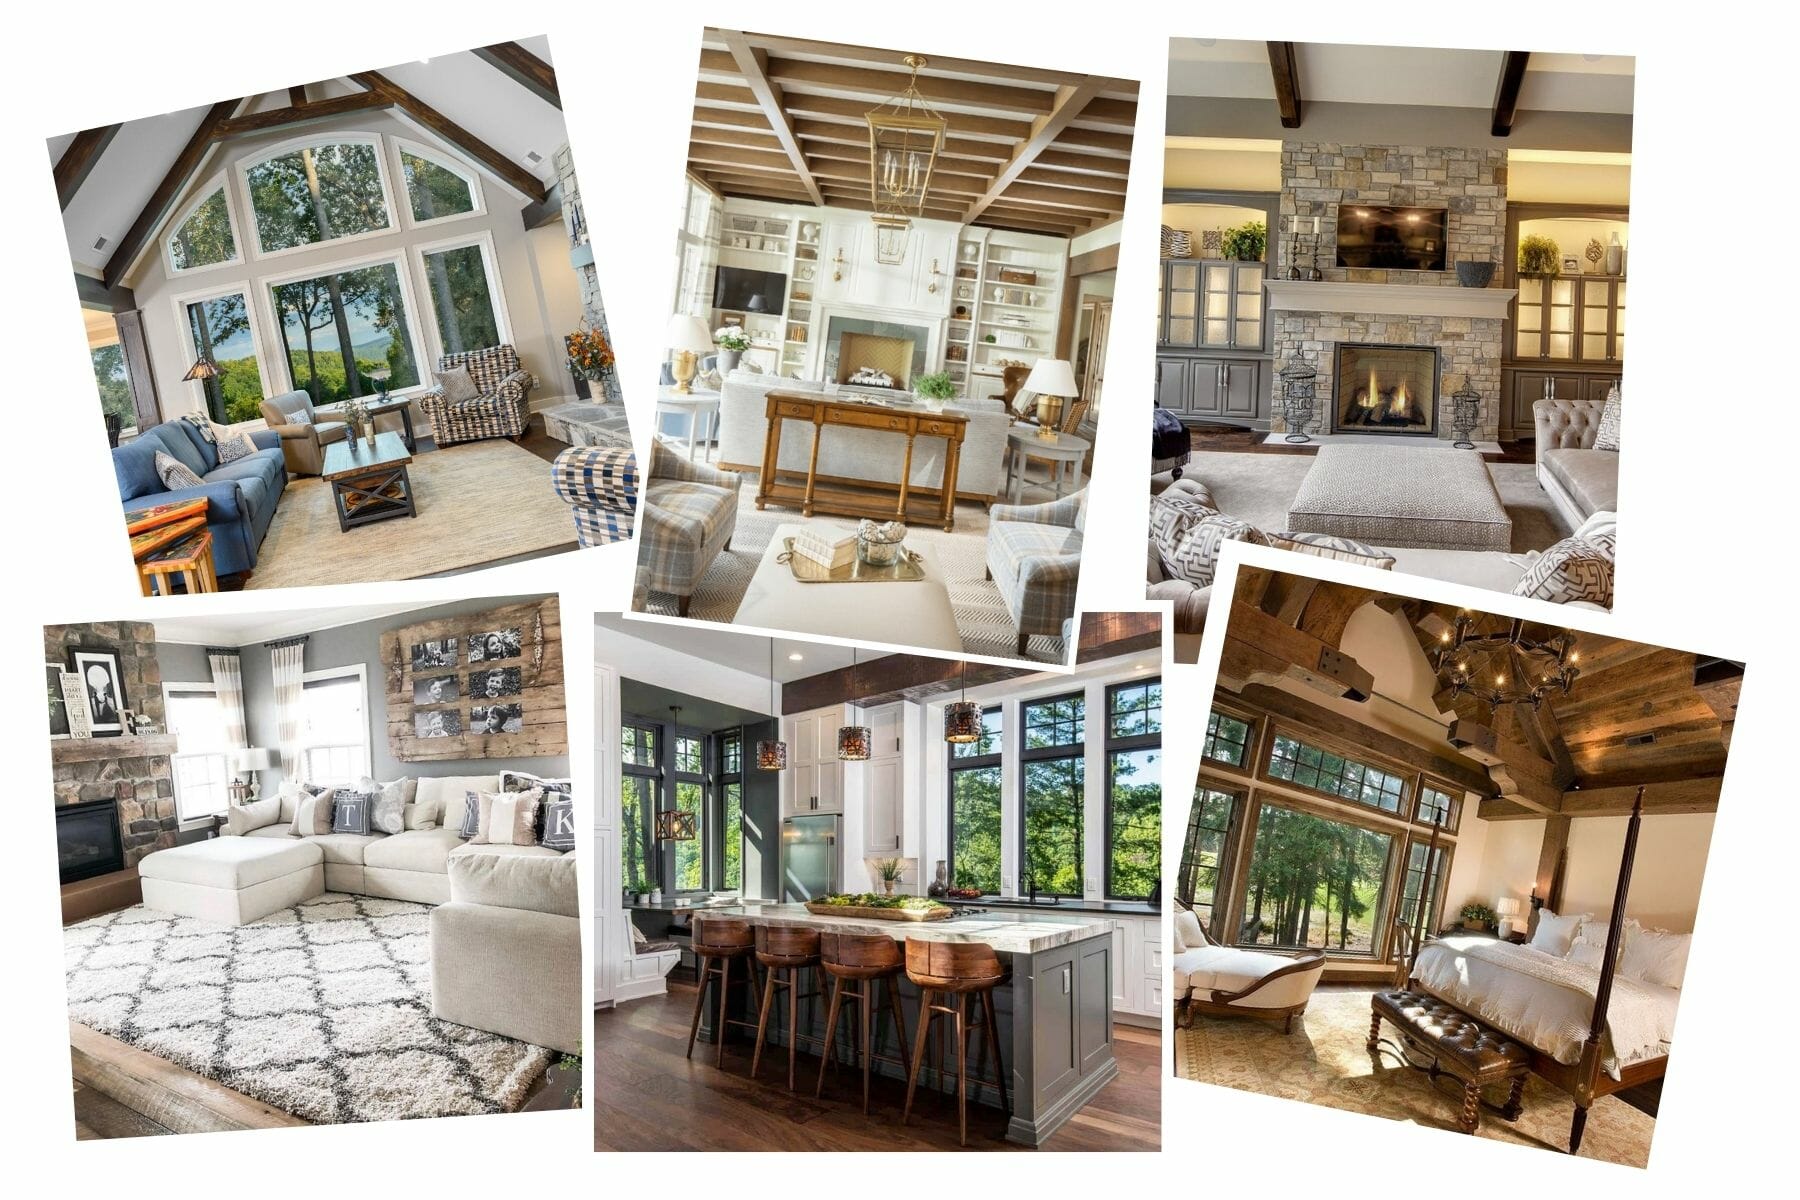 Before & After: Rustic Home Interior Design - Decorilla